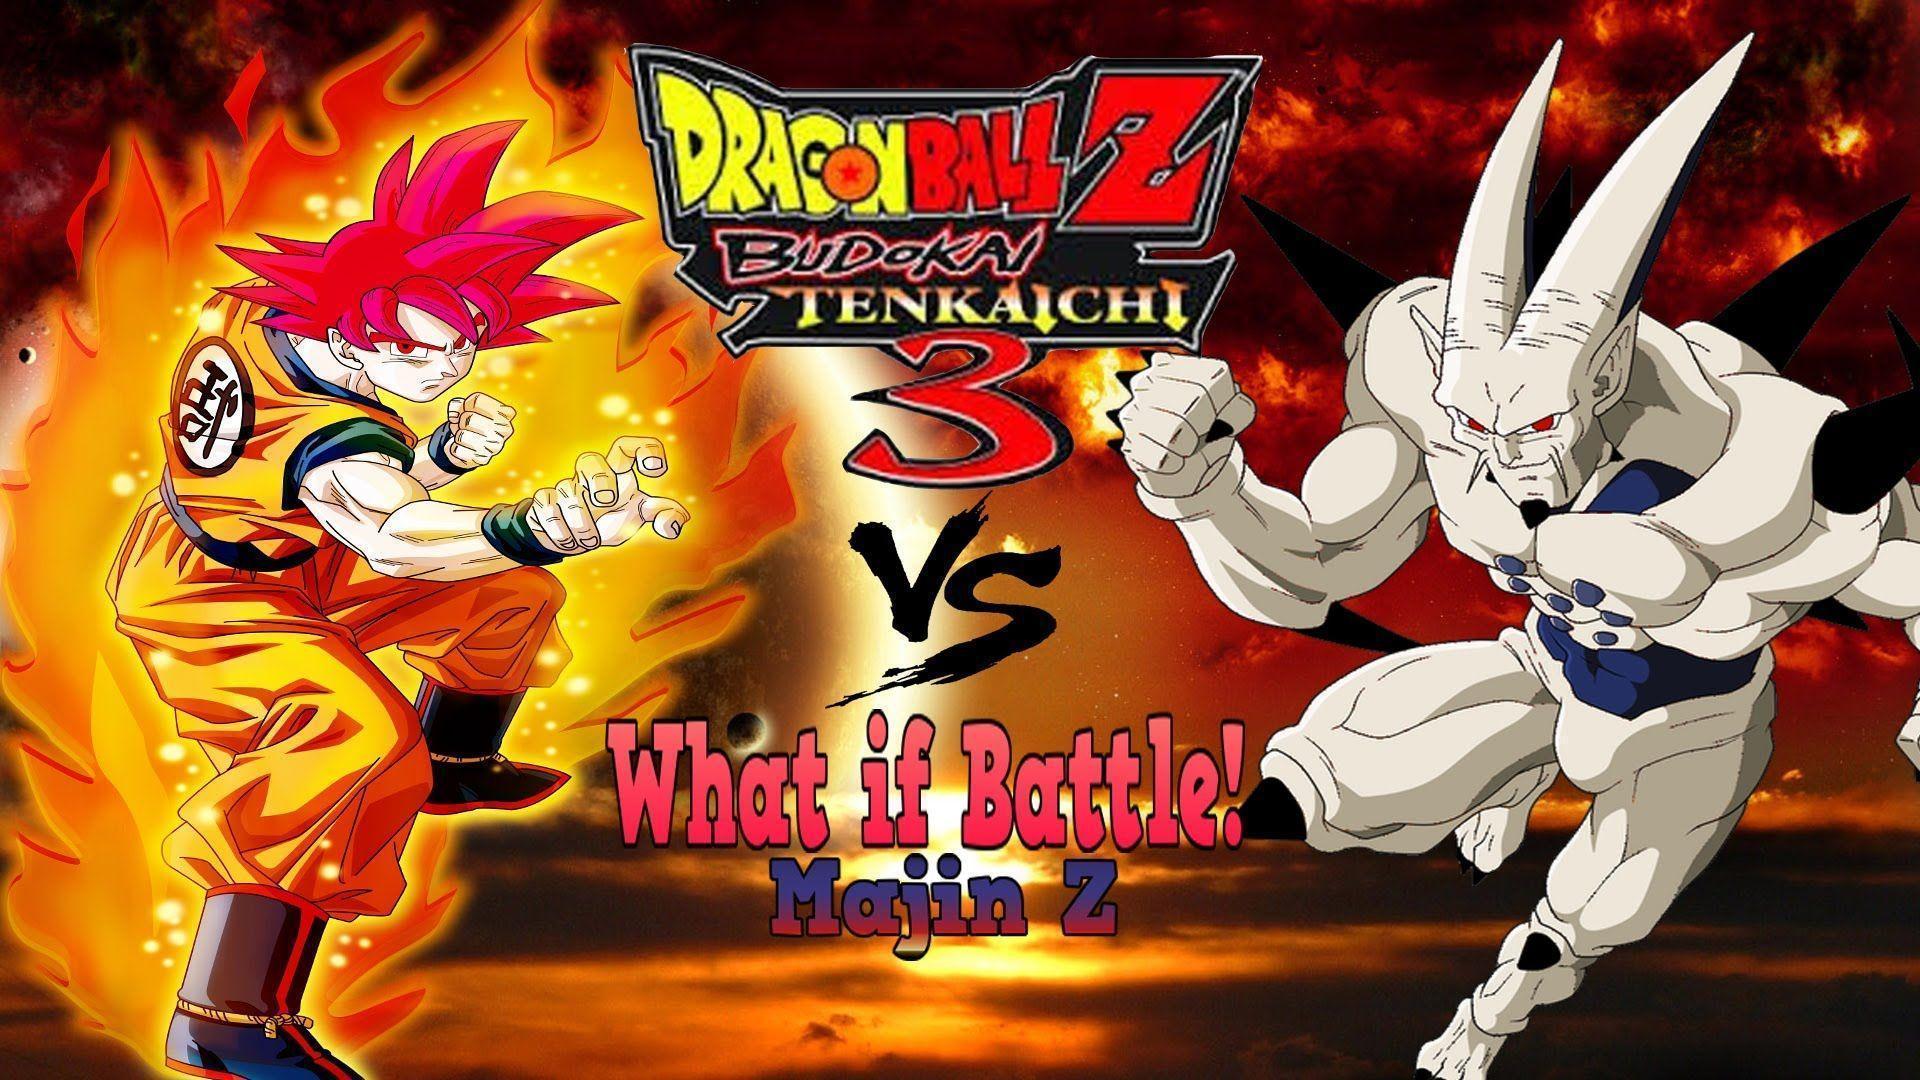 Goku Super Saiyan God vs Omega shenron Dragonball Z Budokai